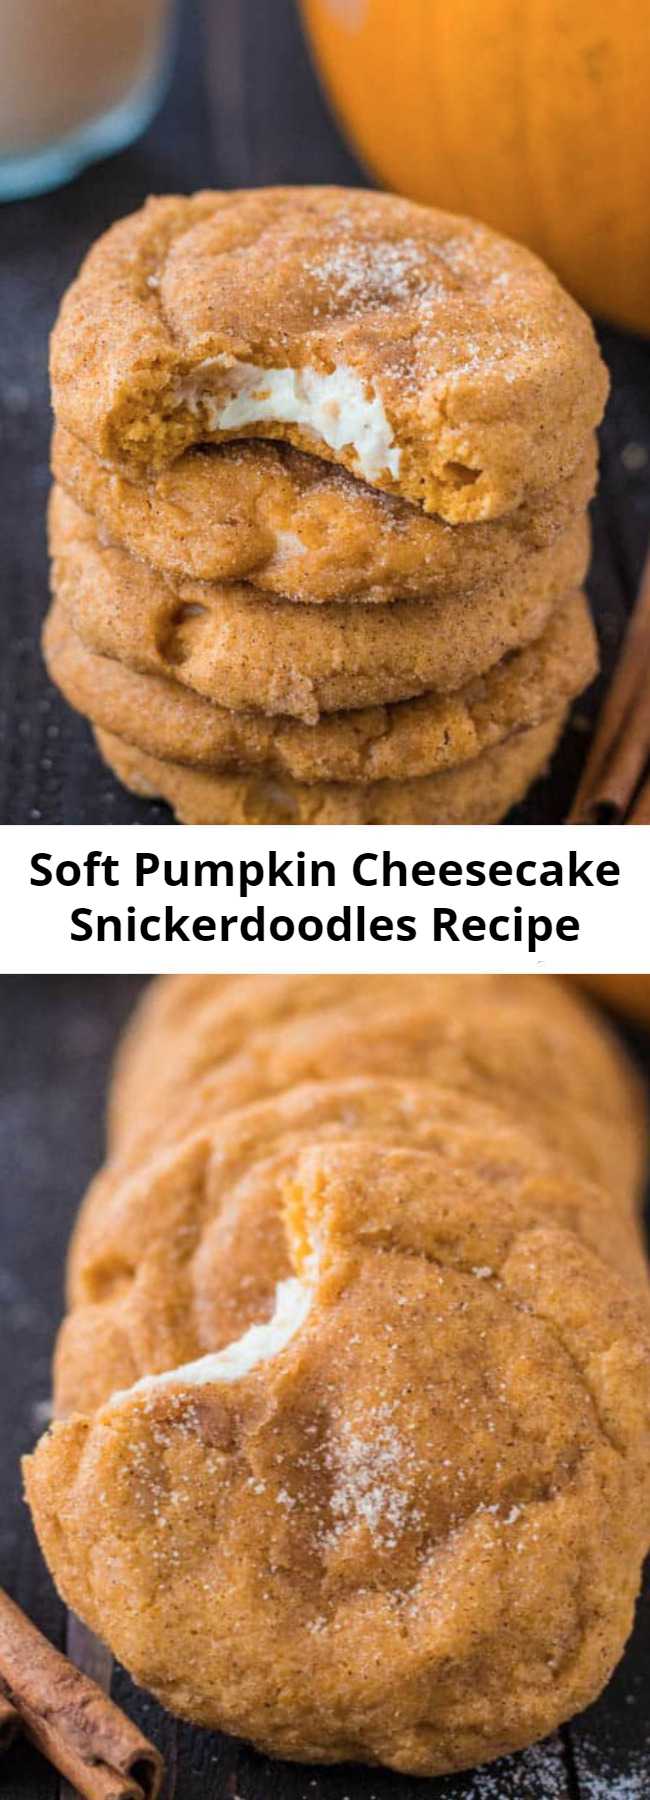 Soft Pumpkin Cheesecake Snickerdoodles Recipe - Delicious soft and puffy pumpkin snickerdoodles with a surprise cream cheese center.